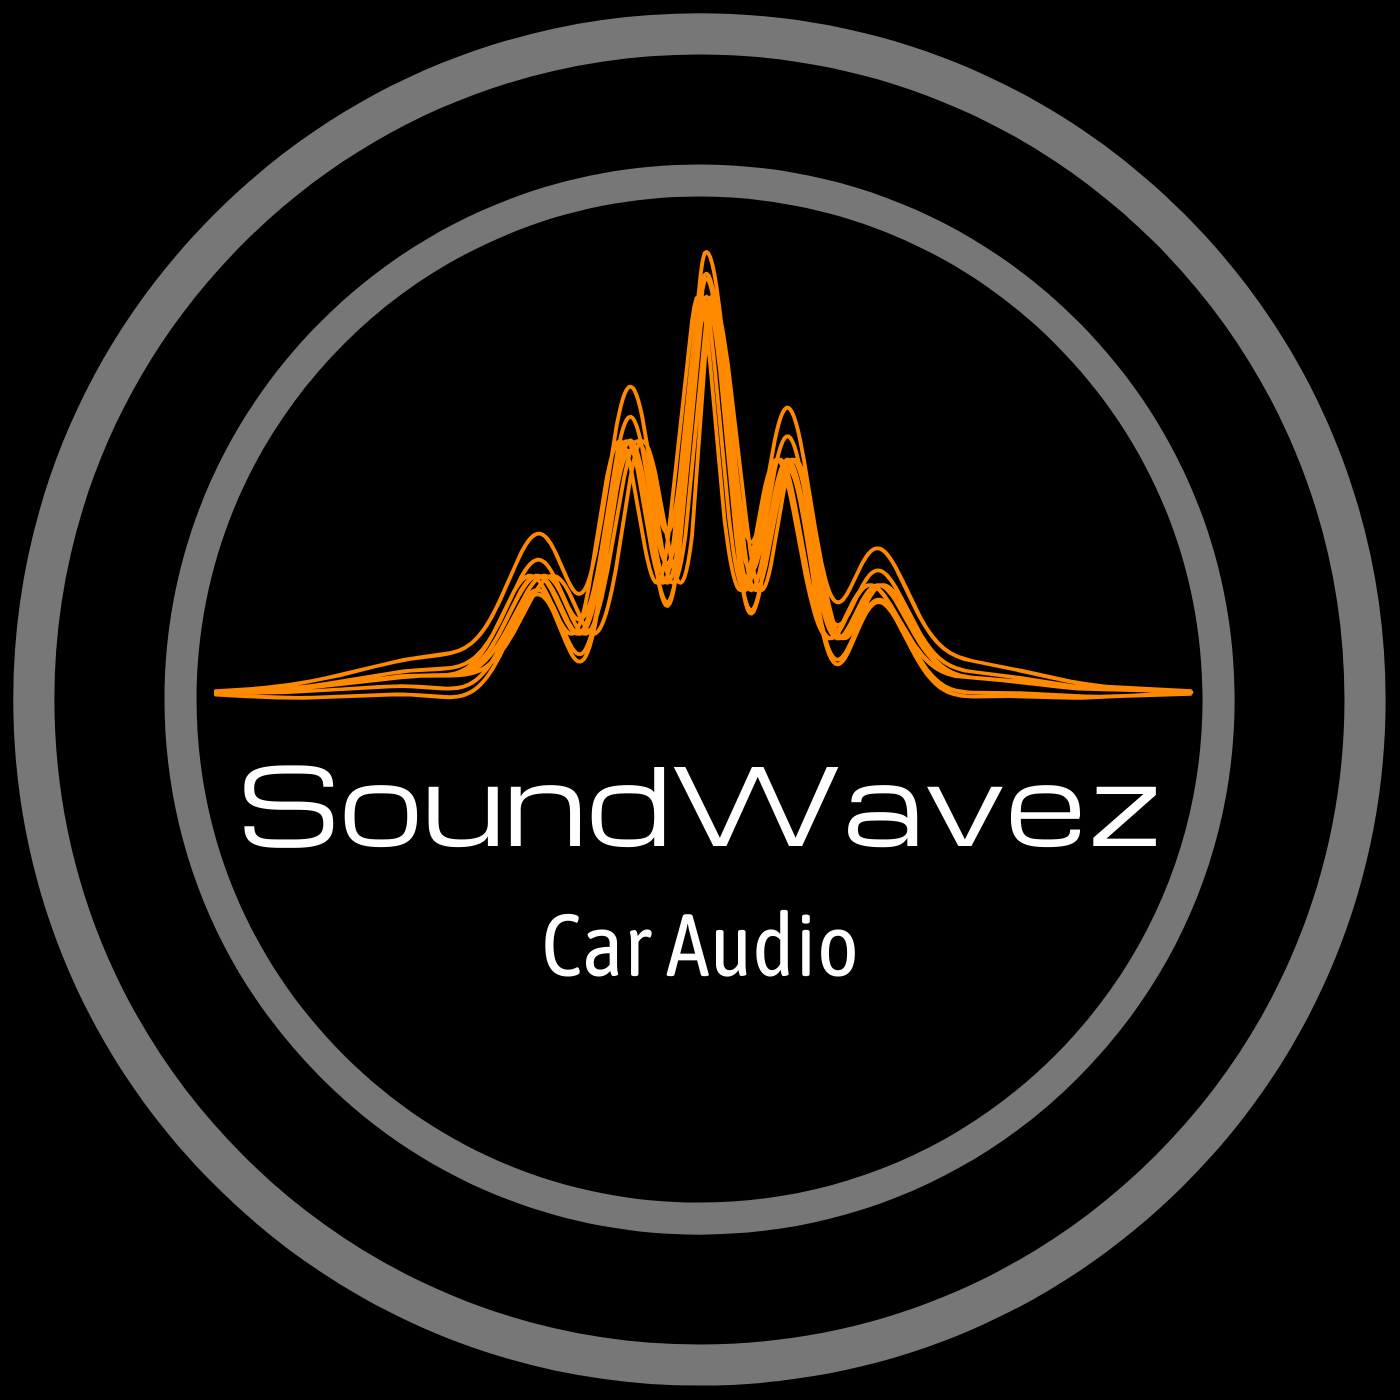 SoundWavez Car Audio